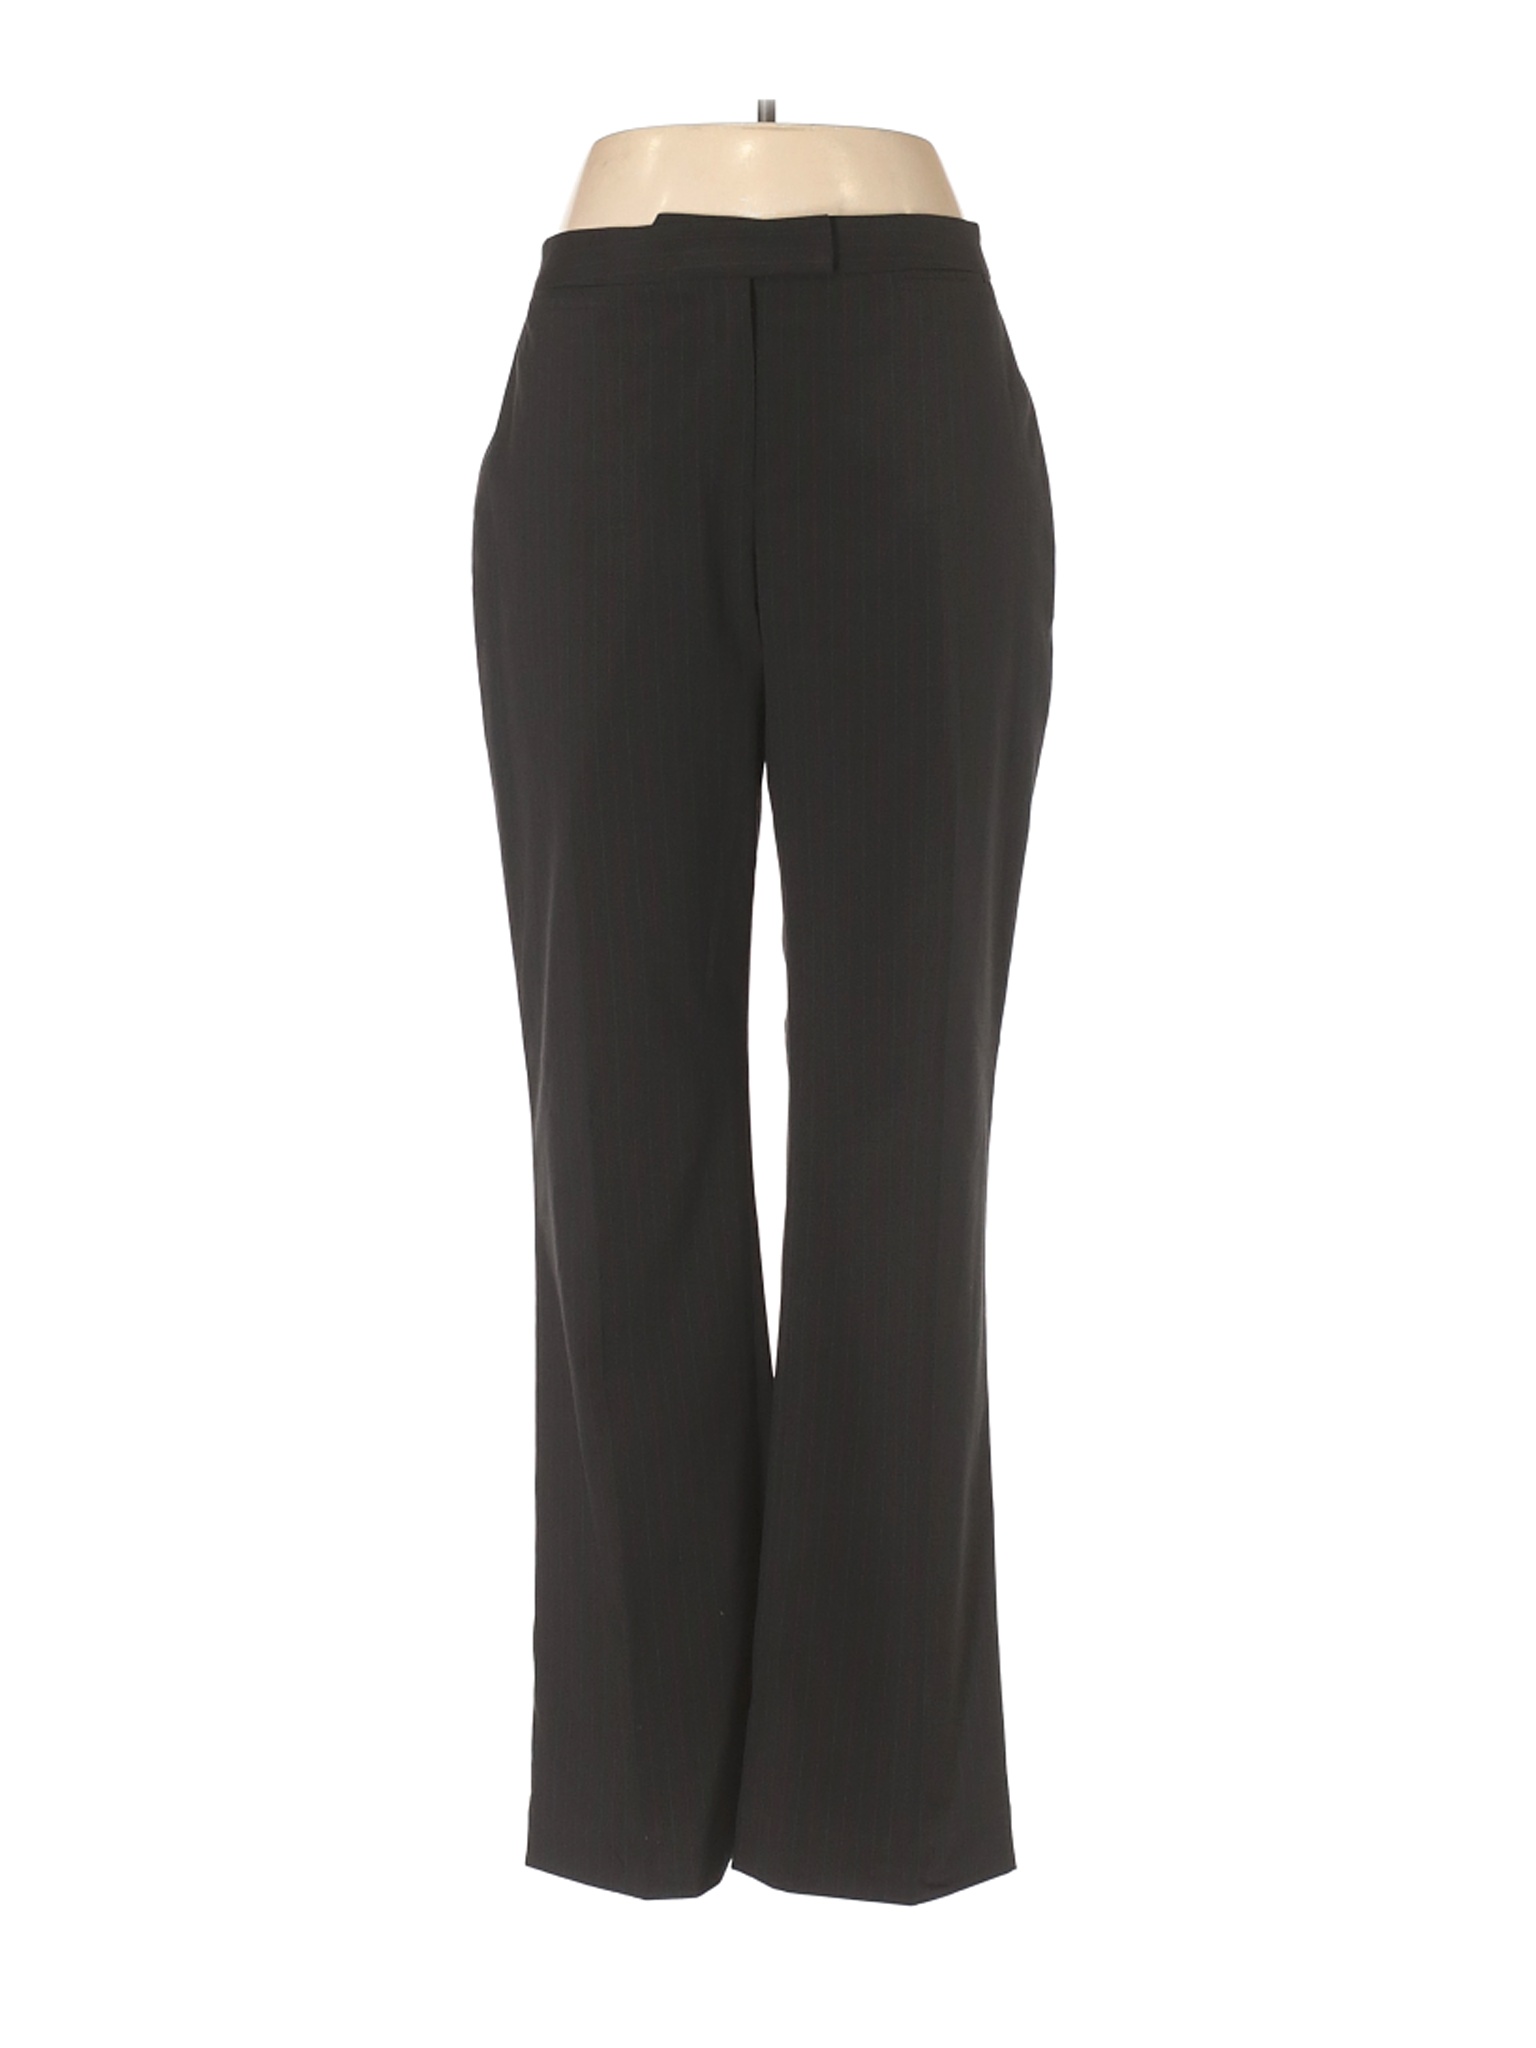 Anne Klein Women Black Dress Pants 12 | eBay